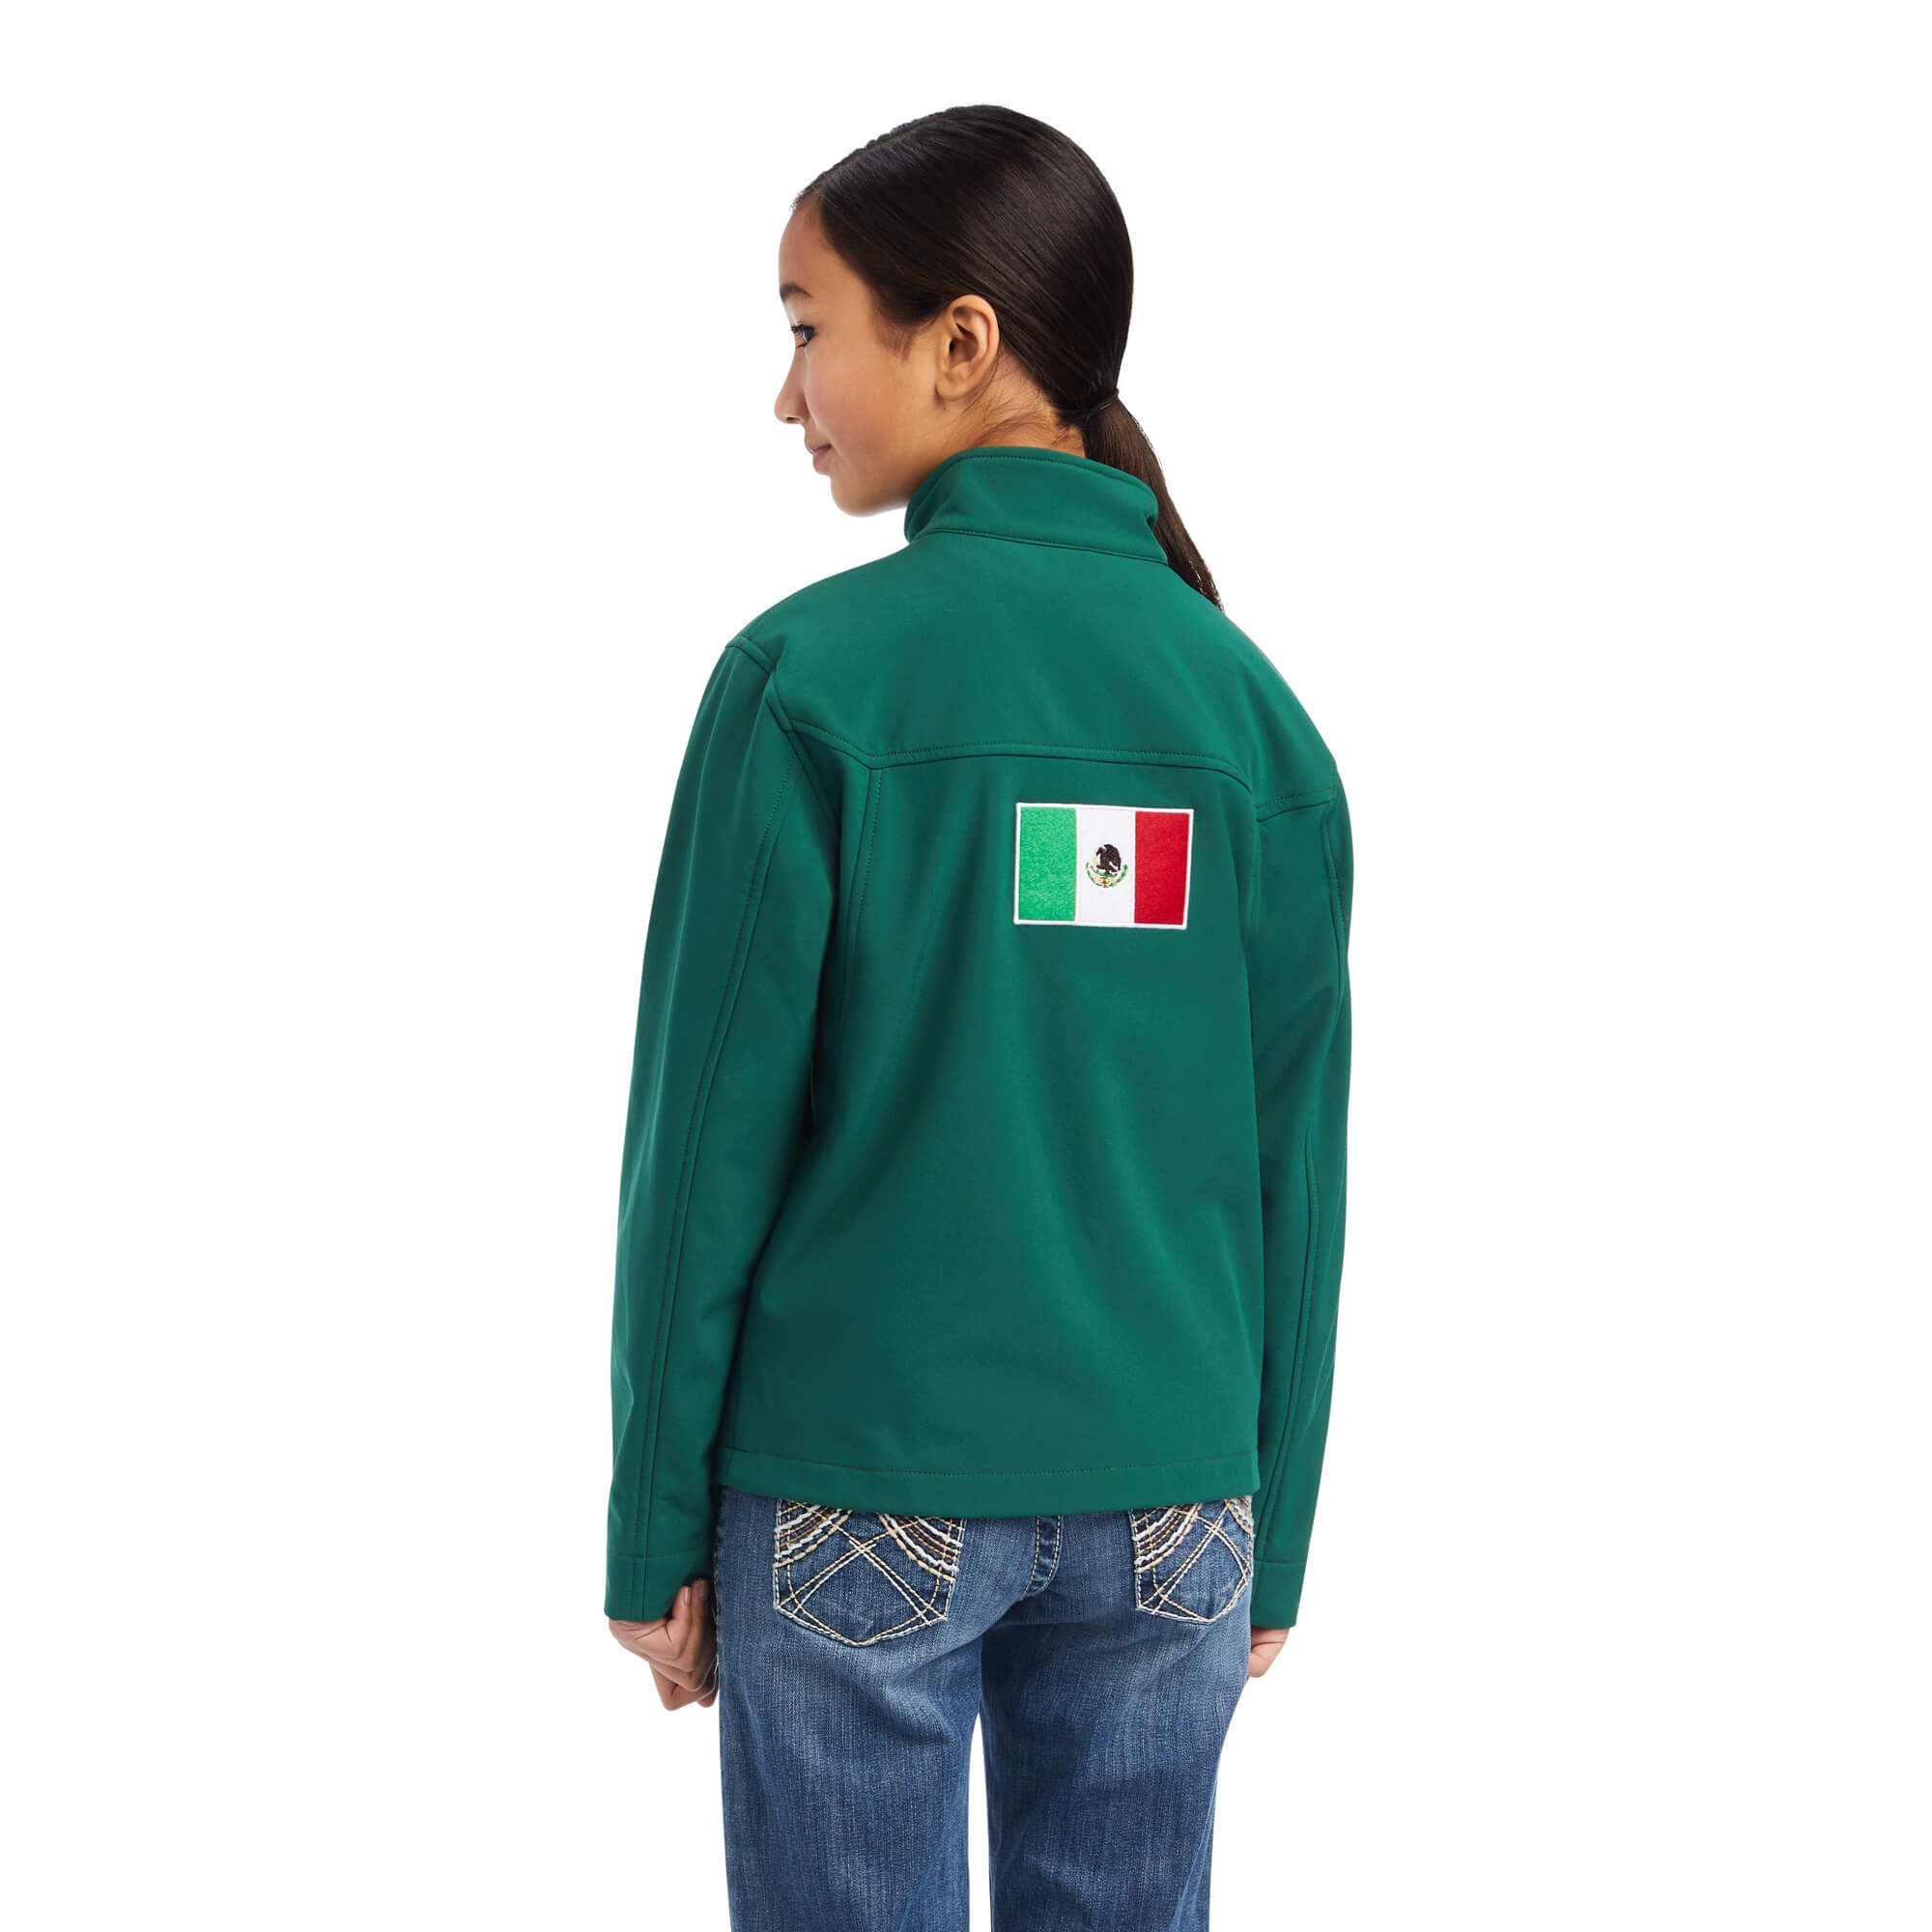 Ariat Youth Mexico Team Softshell Jacket